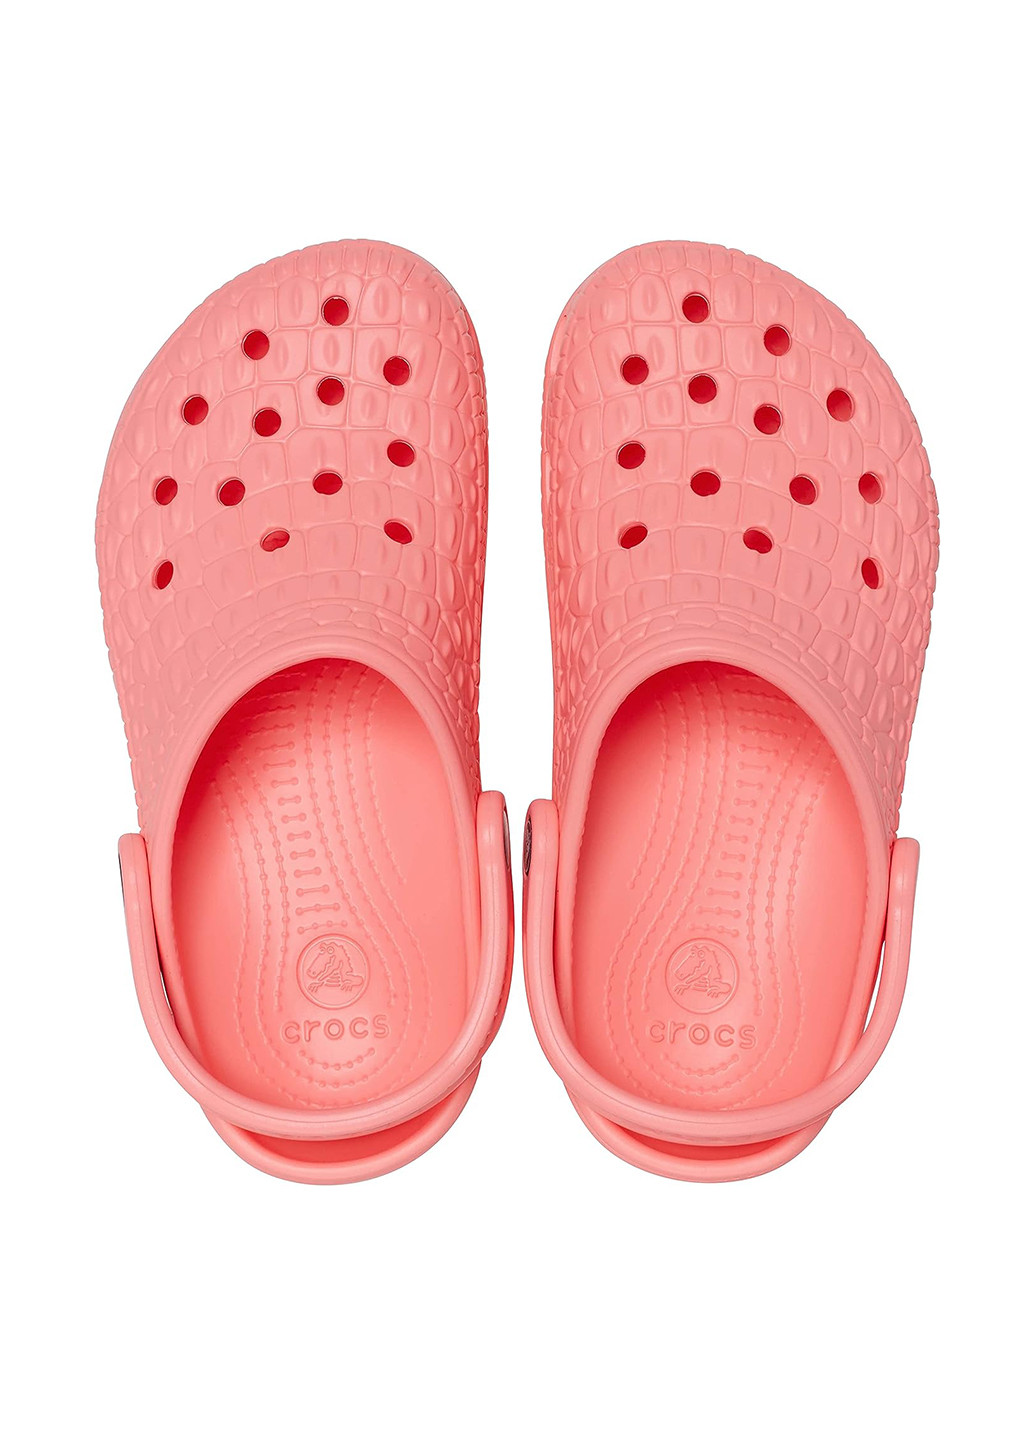 Розовые сабо Crocs без каблука